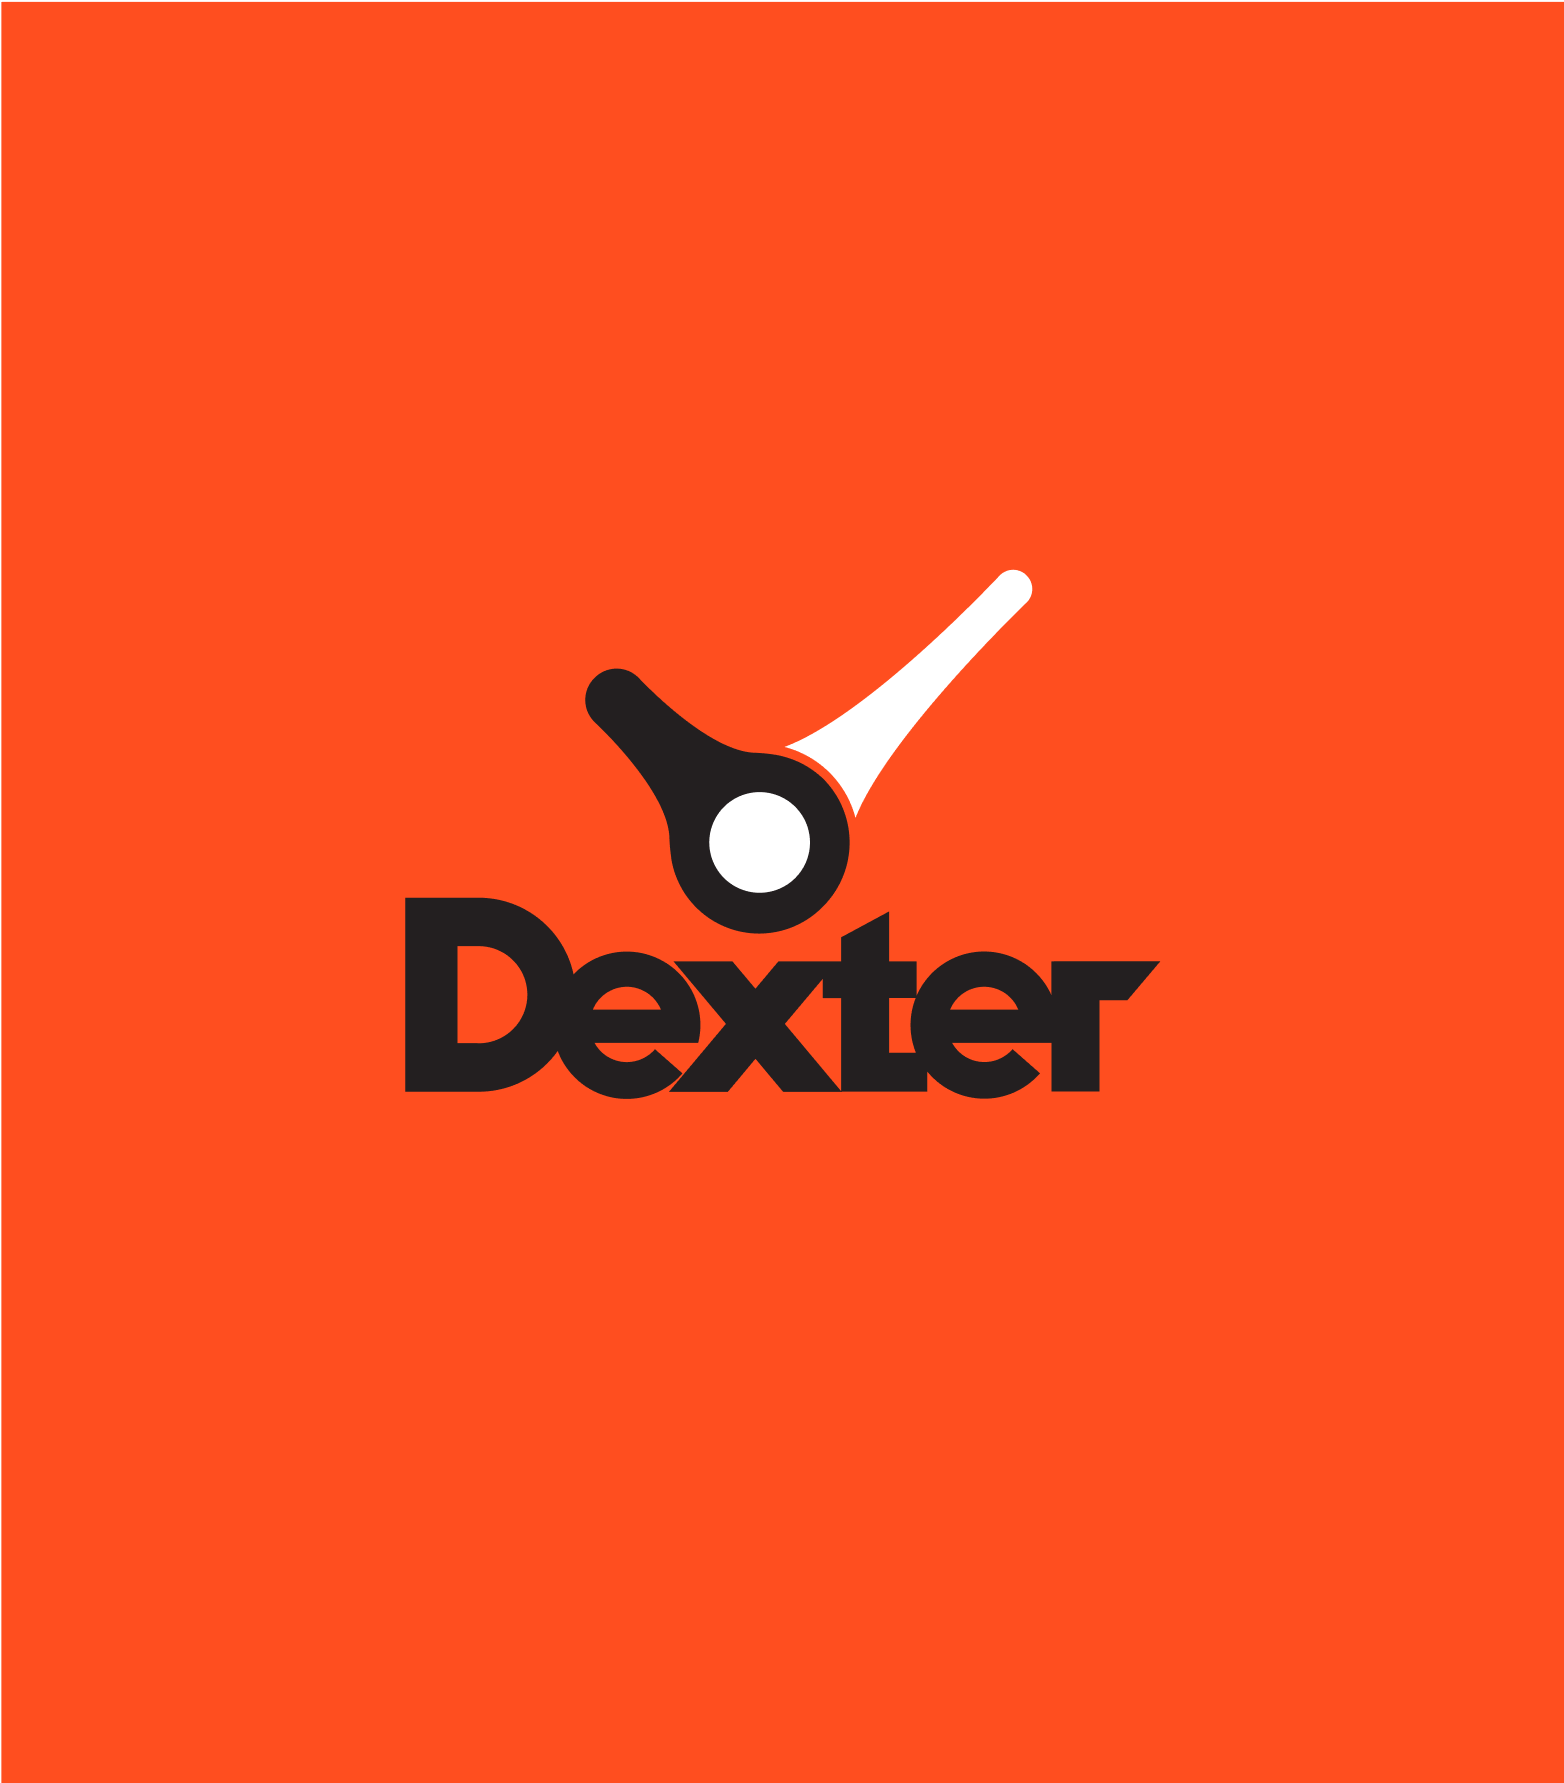 Dexter. Avia-Taxi